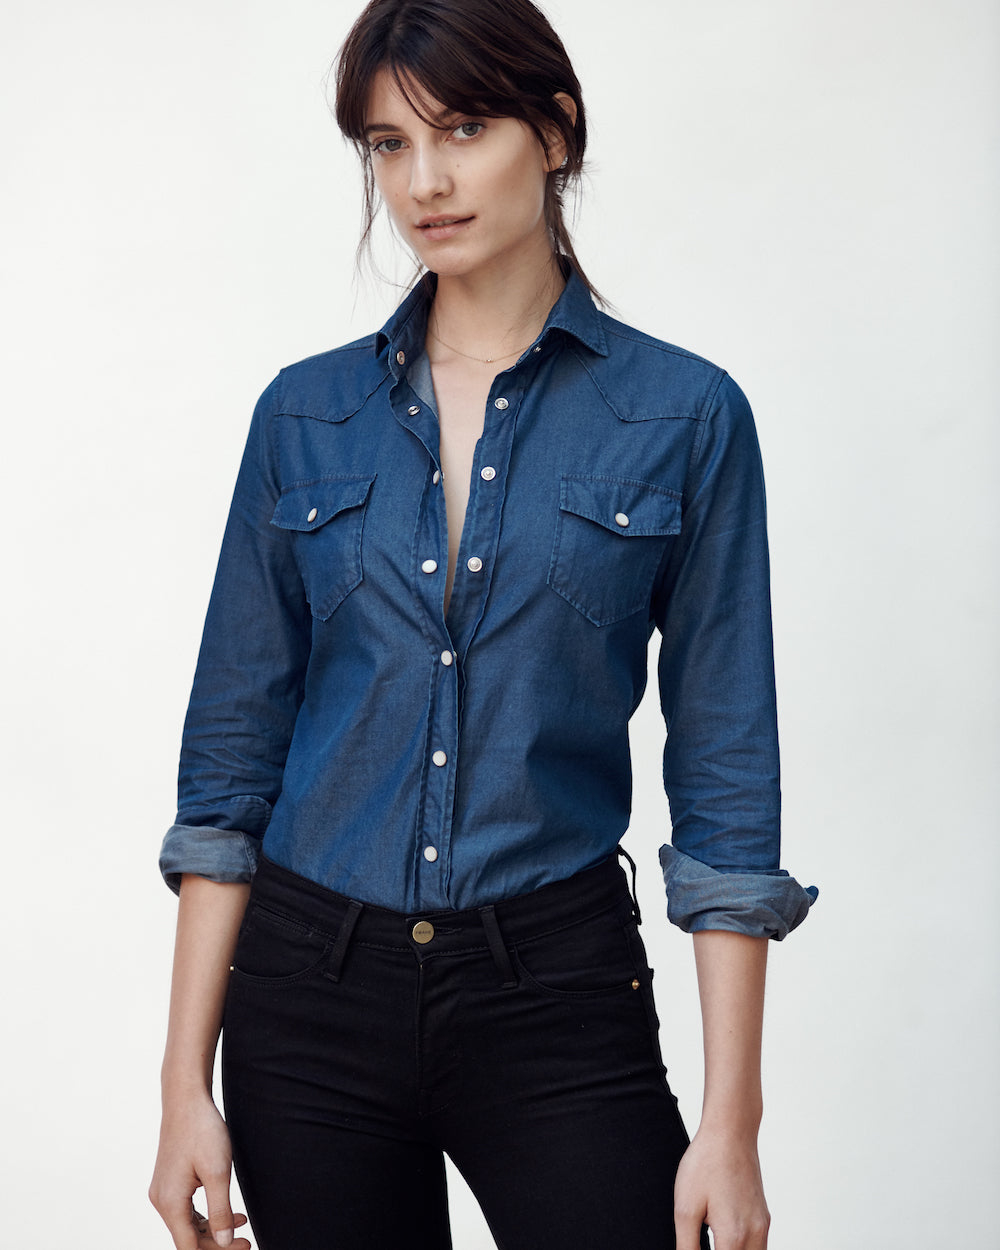 Female model wearing the Denim Western Shirt.